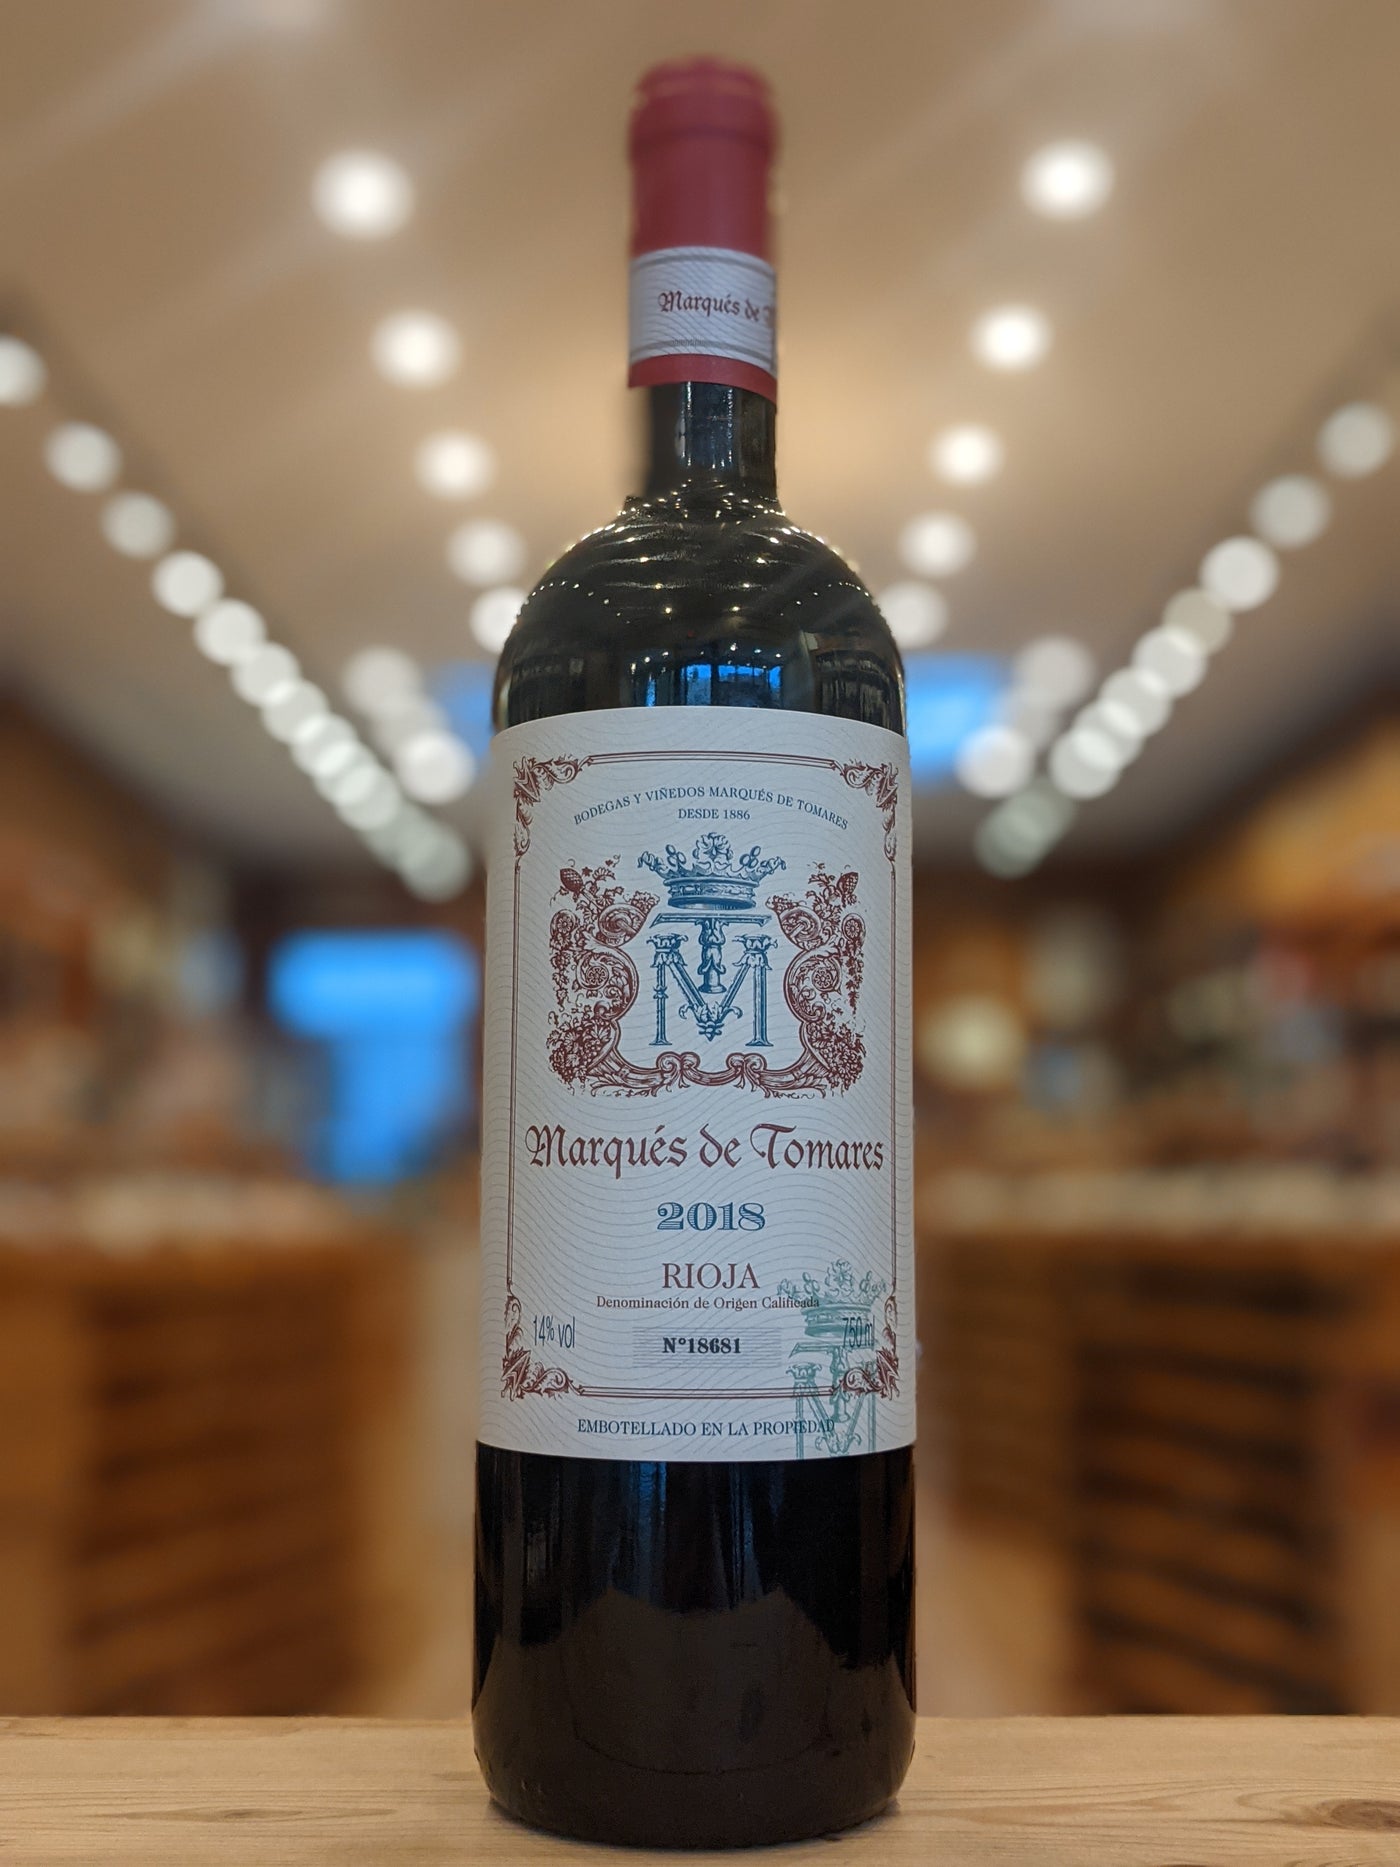 Marques de Tomares Rioja 2018